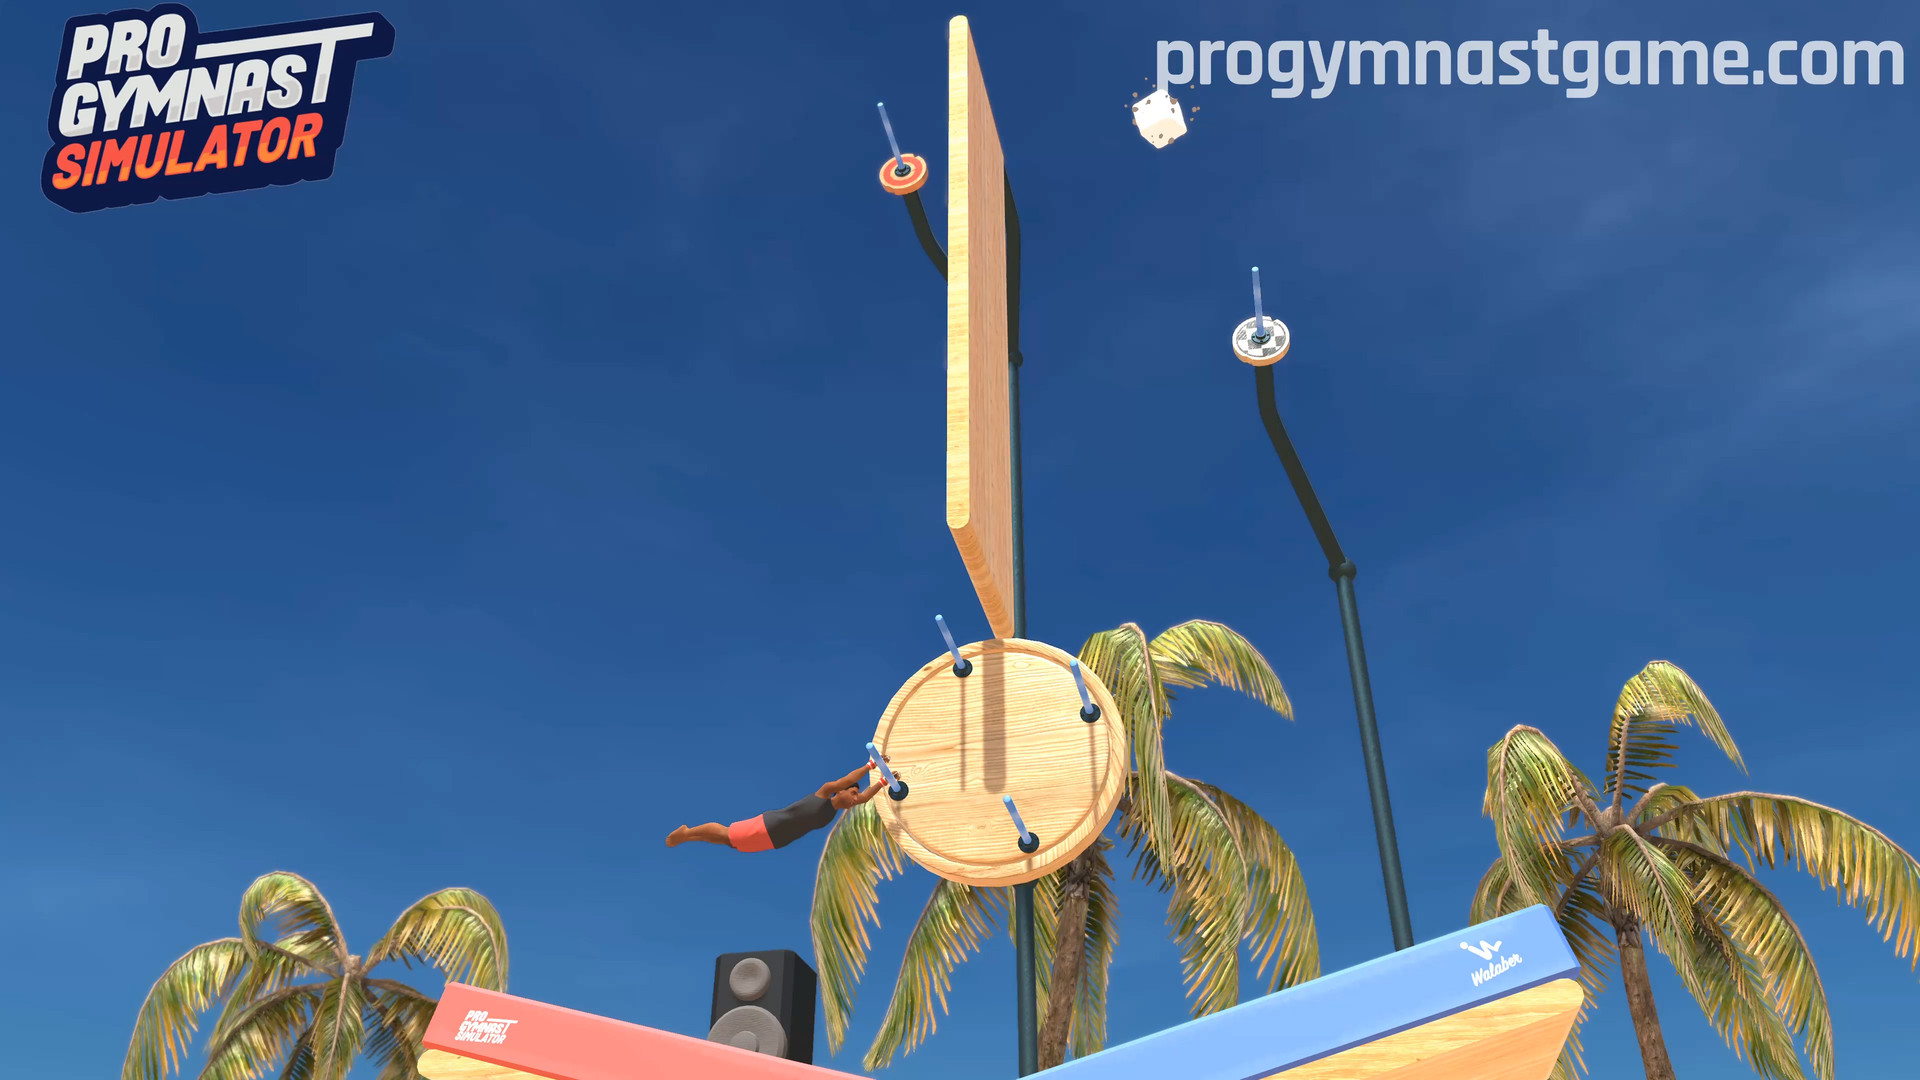 Pro Gymnast Simulator on Steam